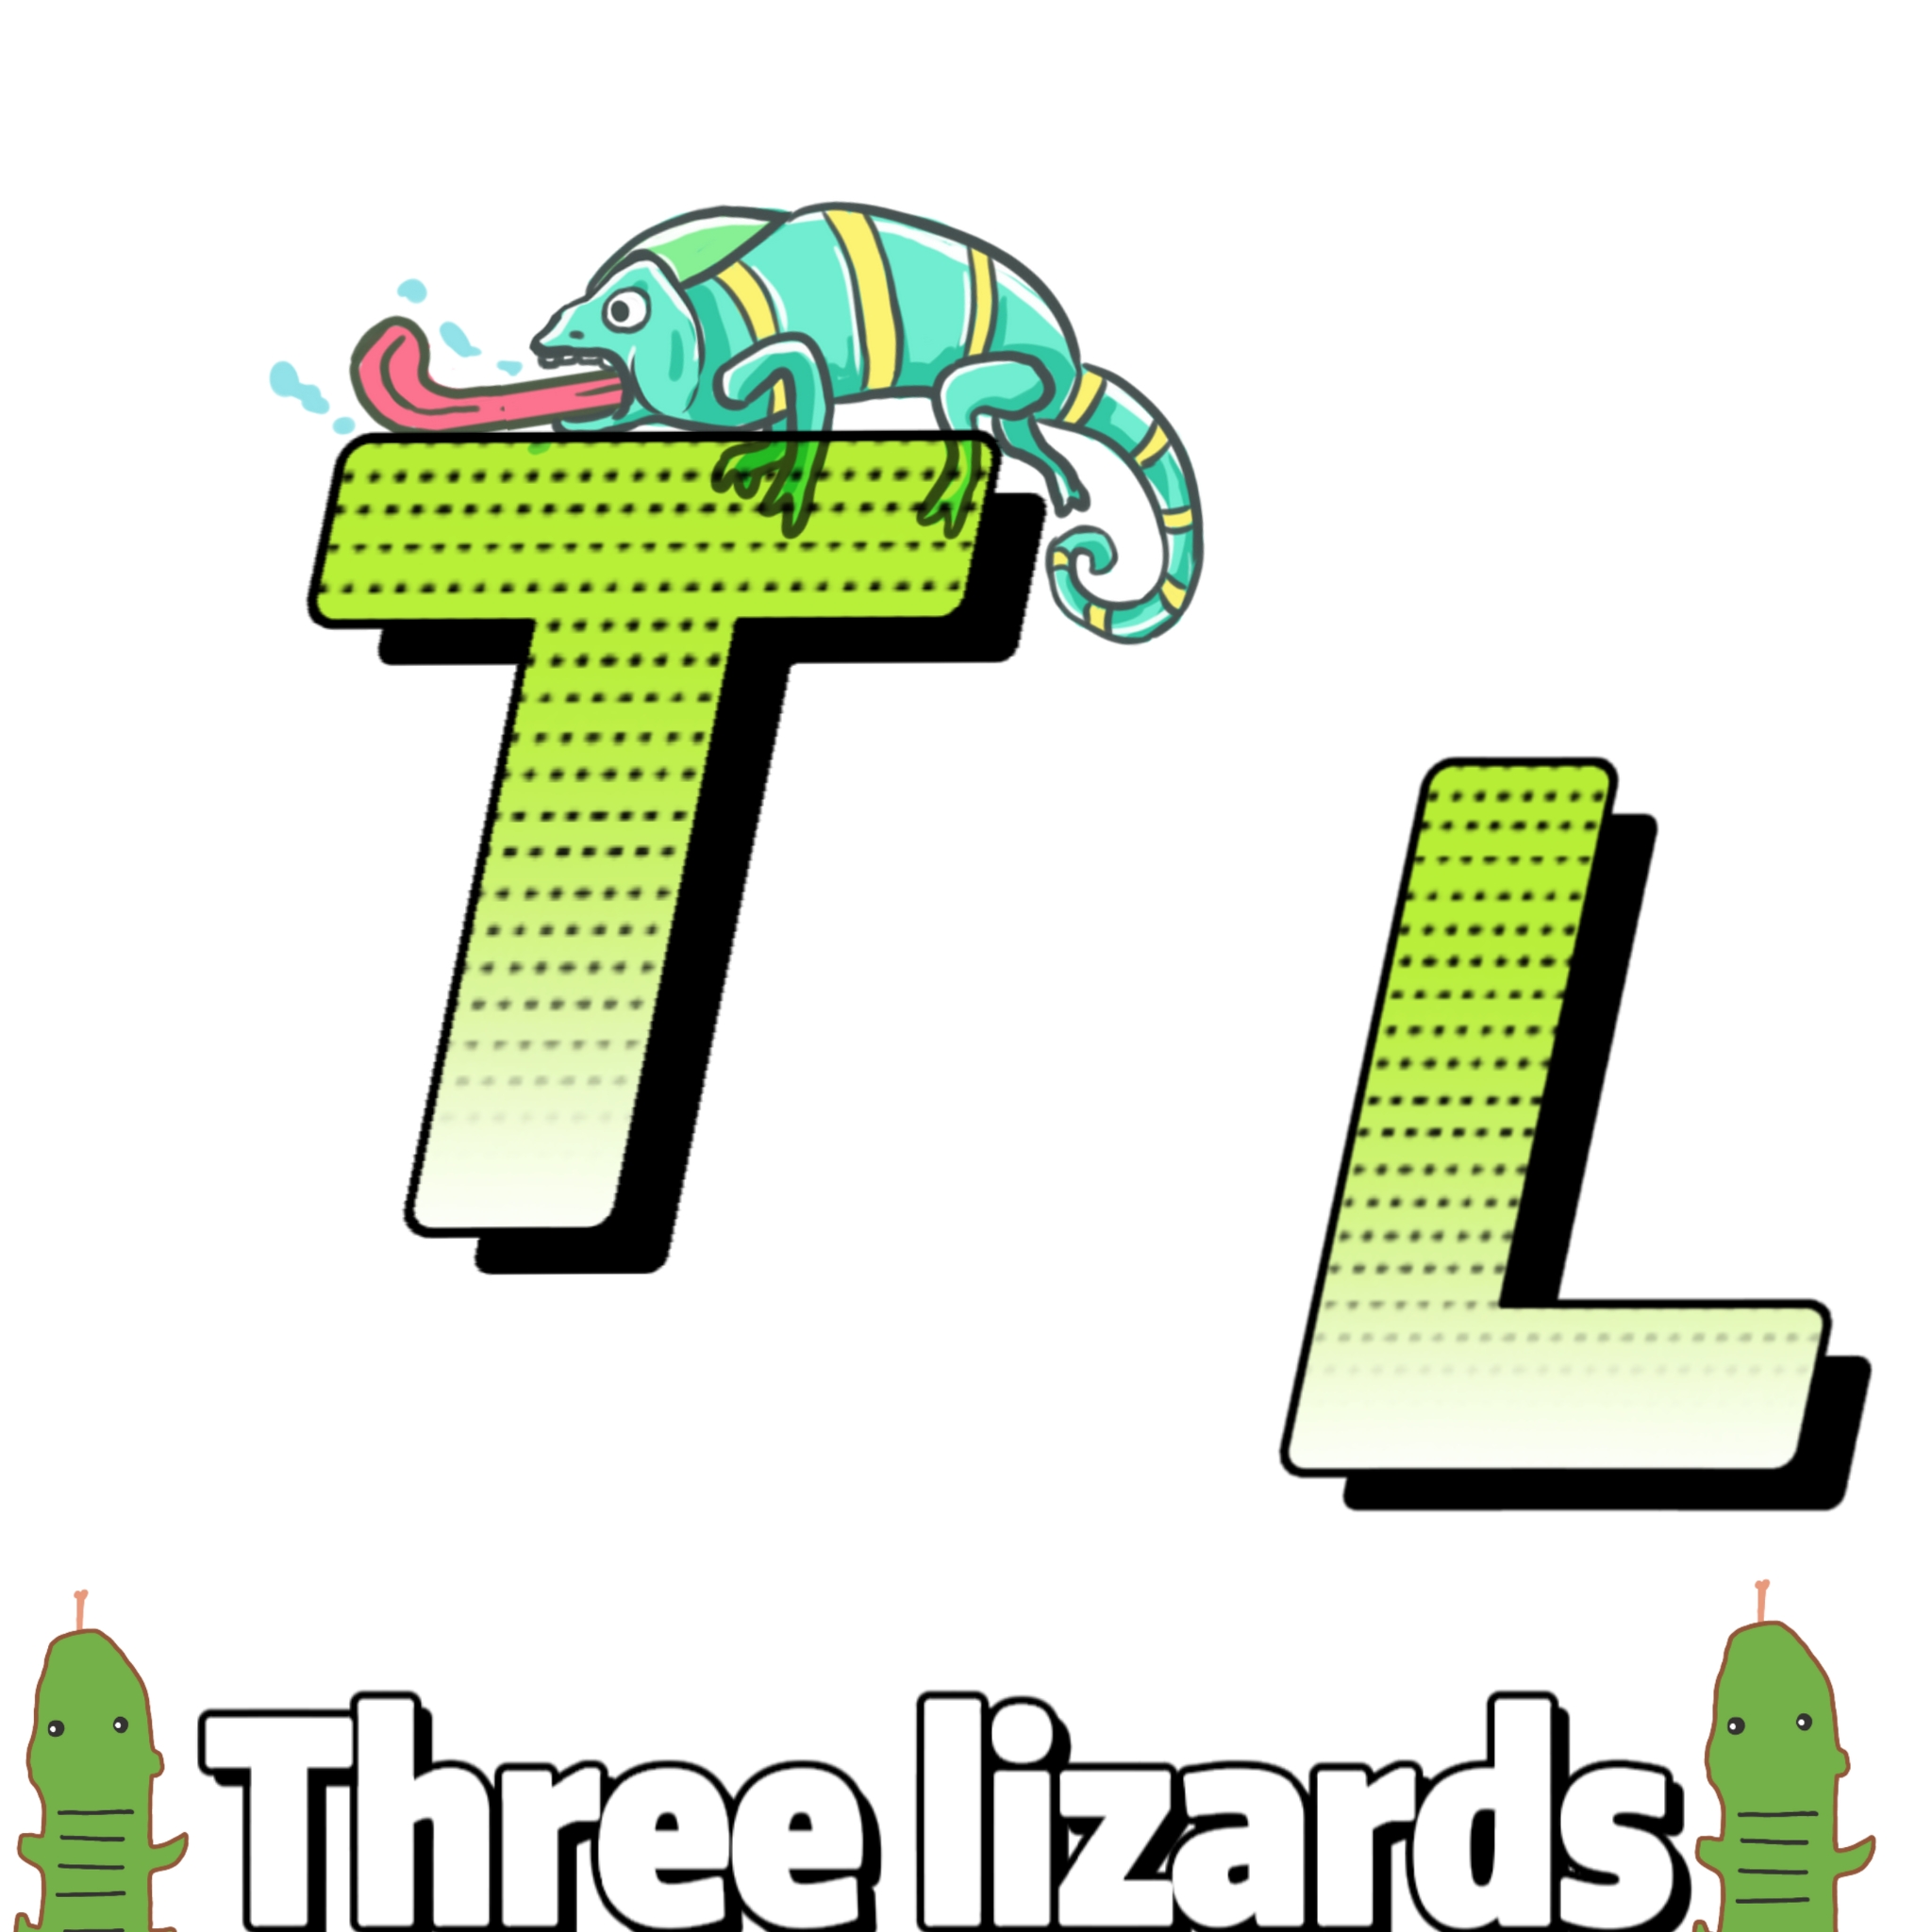 Three lizards